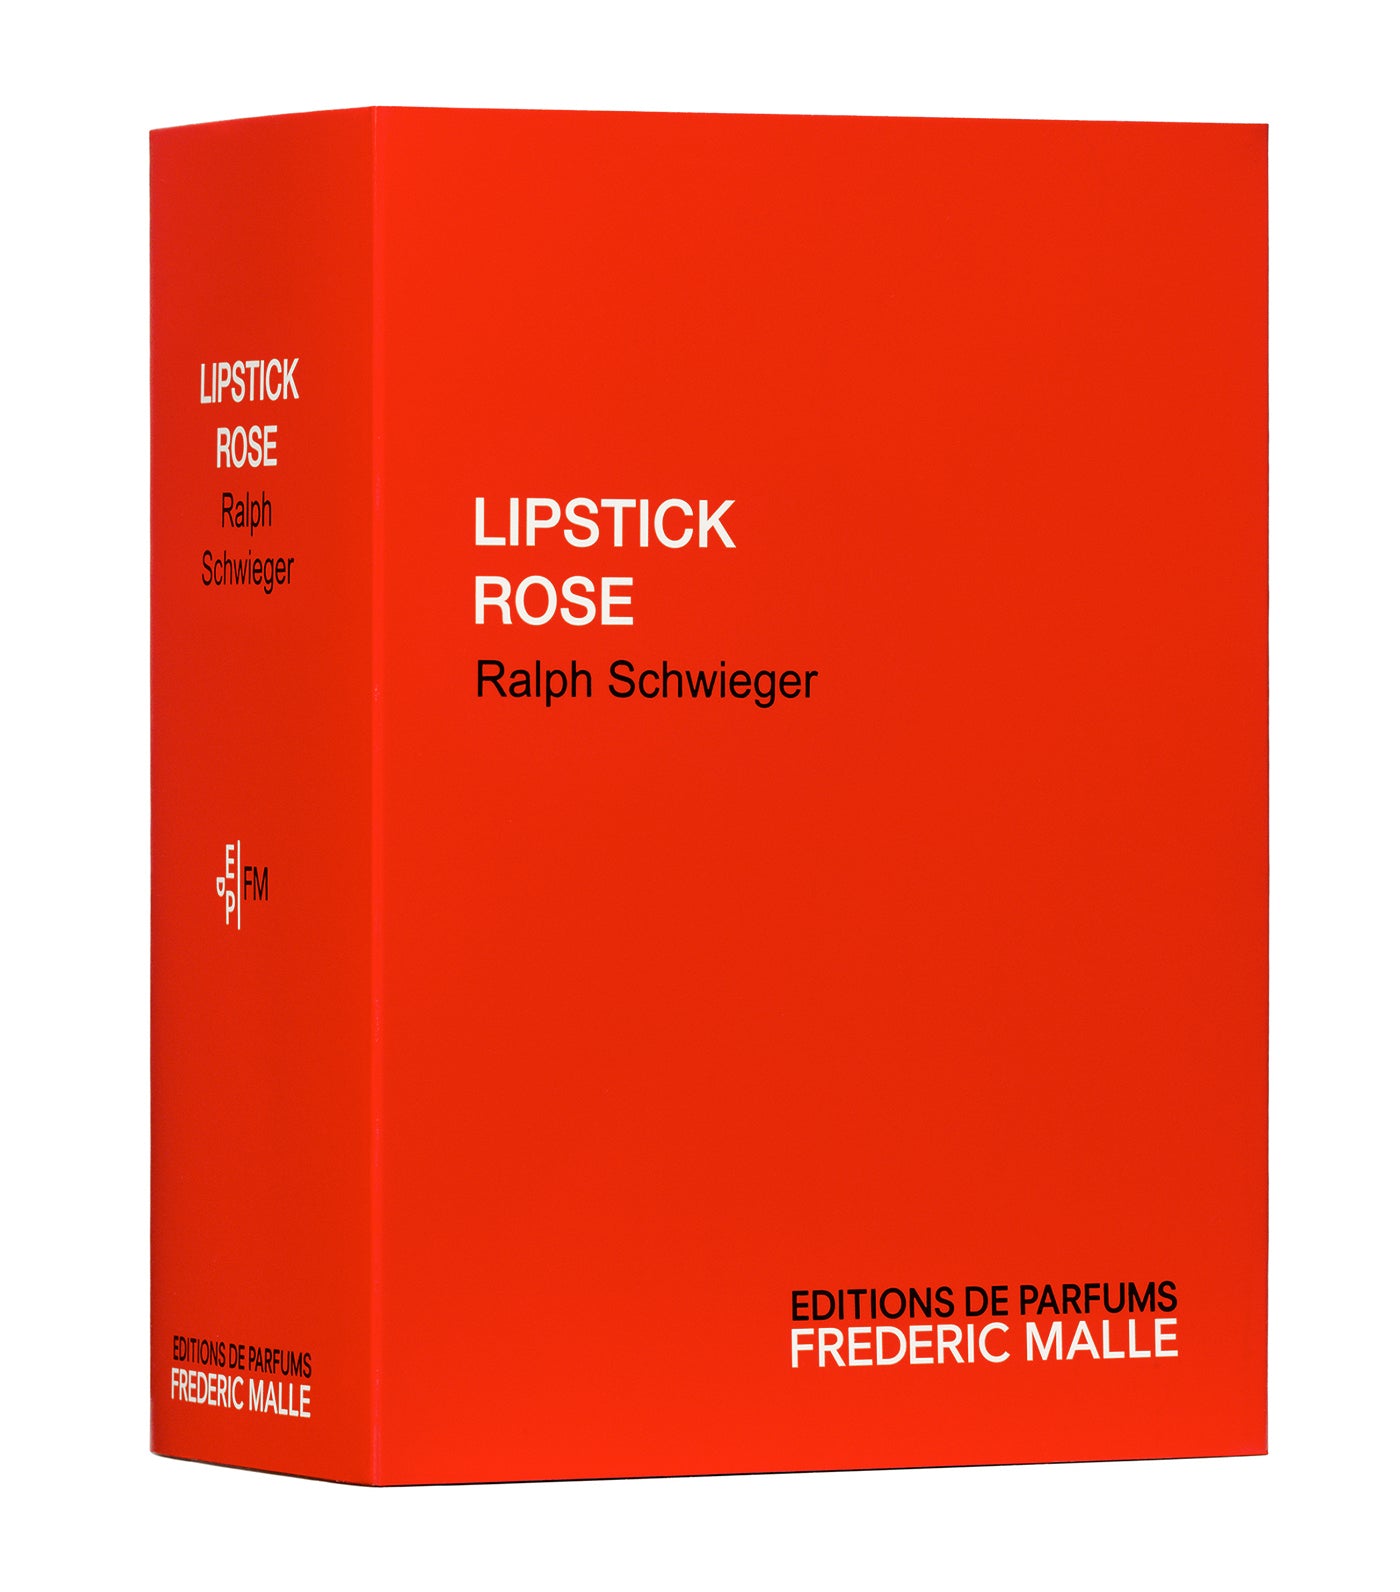 Lipstick Rose Perfume by Ralf Schwieger